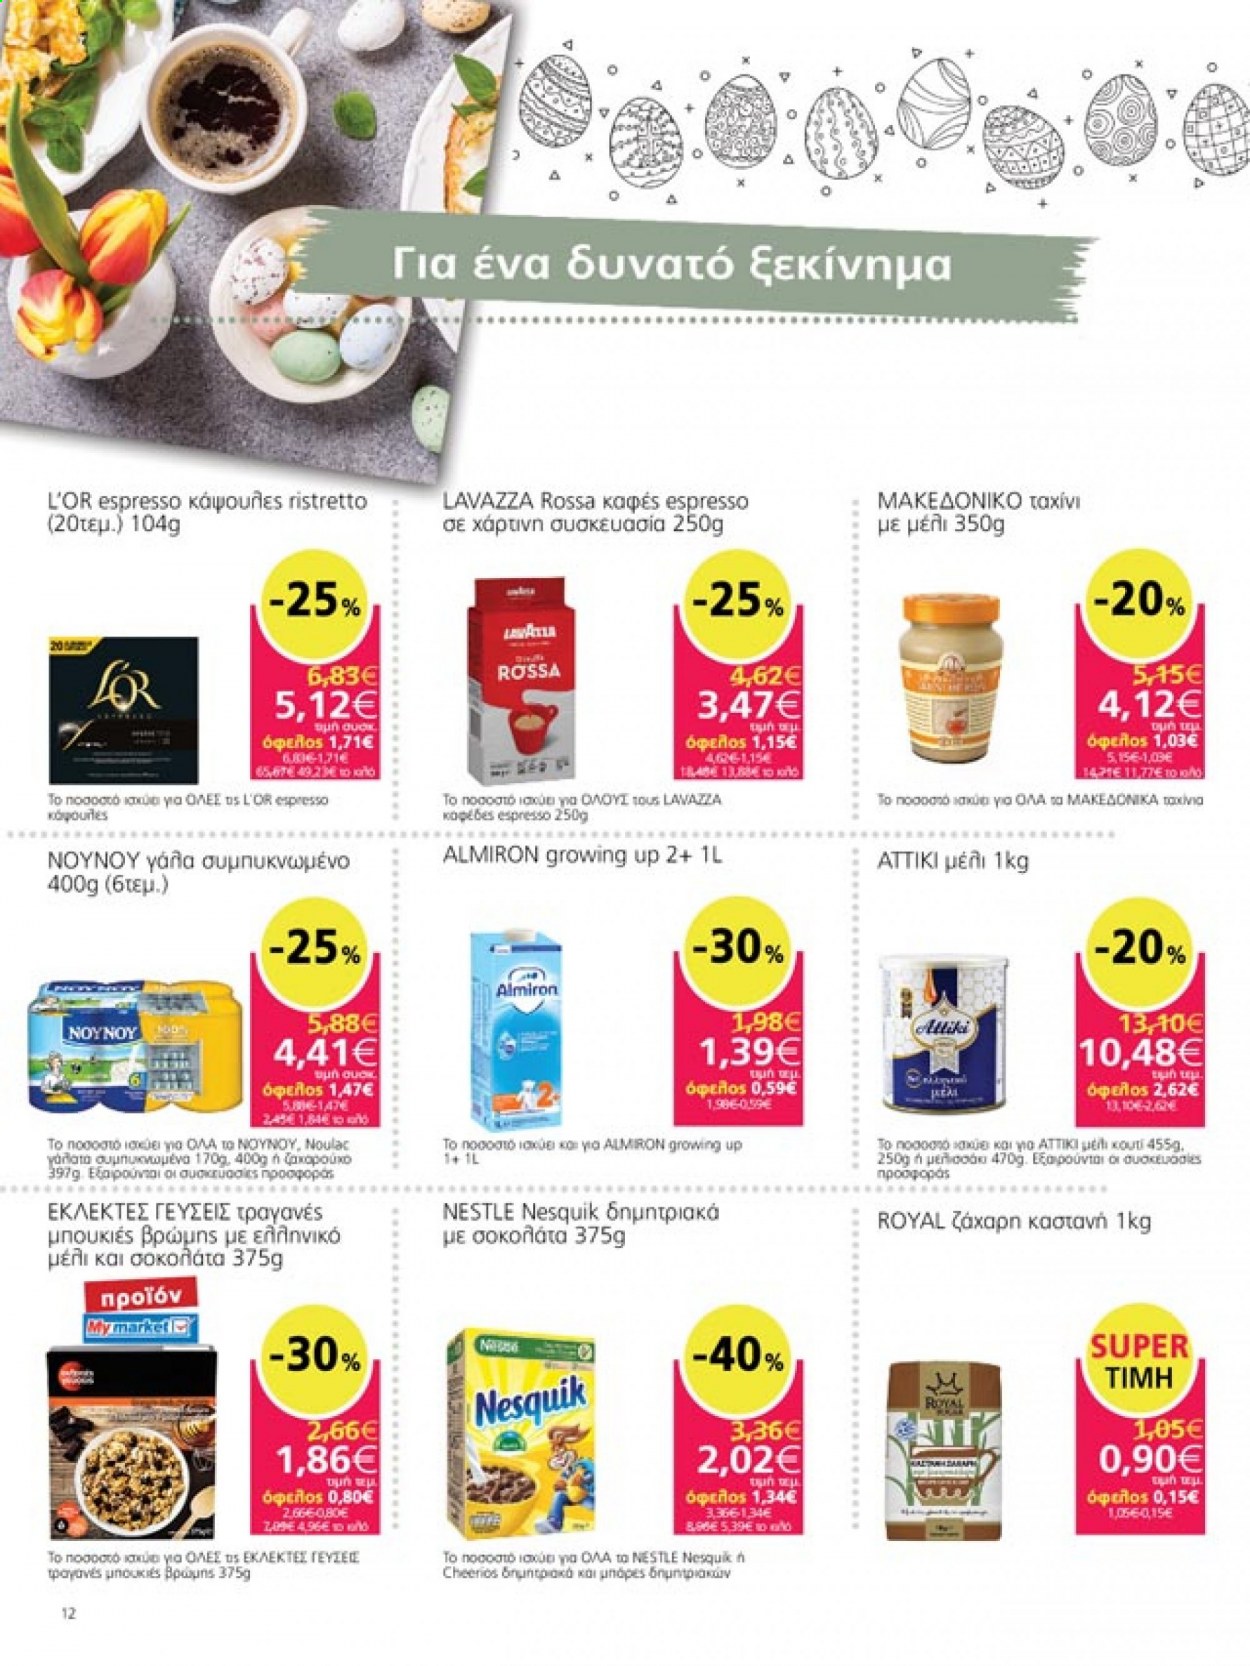 thumbnail - Φυλλάδια My market - 21.04.2021 - 04.05.2021 - Εκπτωτικά προϊόντα - γάλα, Nestlé, σοκολάτα, ζάχαρη, cheerios, μέλι. Σελίδα 12.